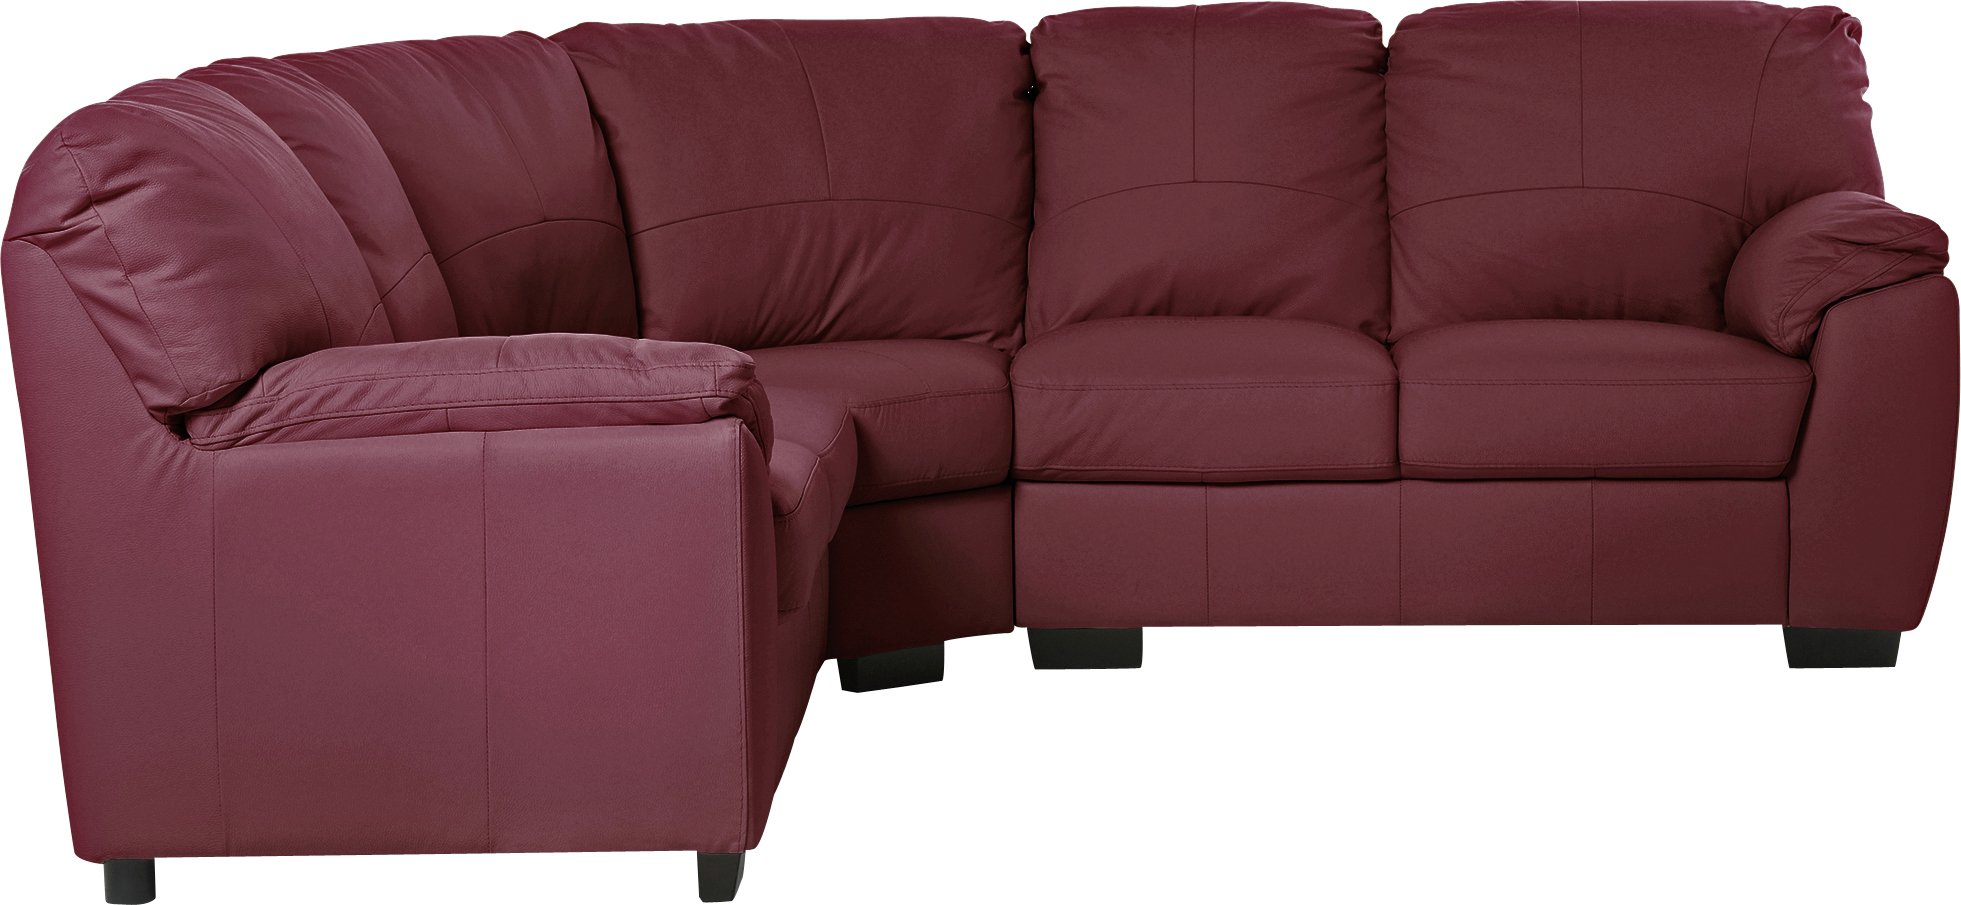 argos leather chesterfield sofa